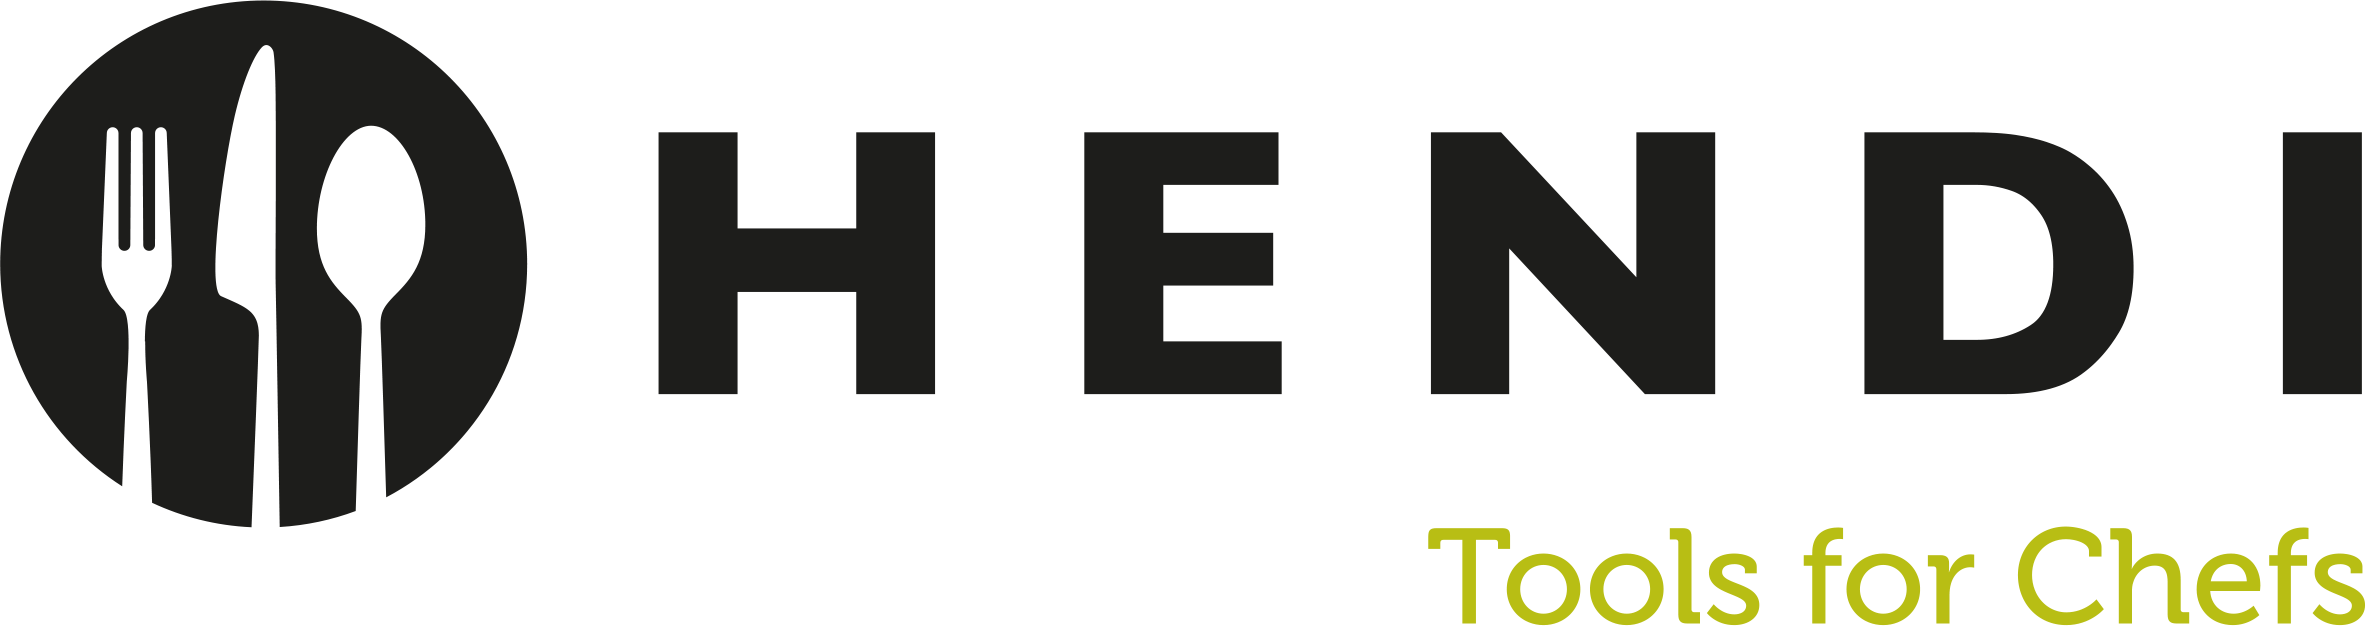 Hendi Logo